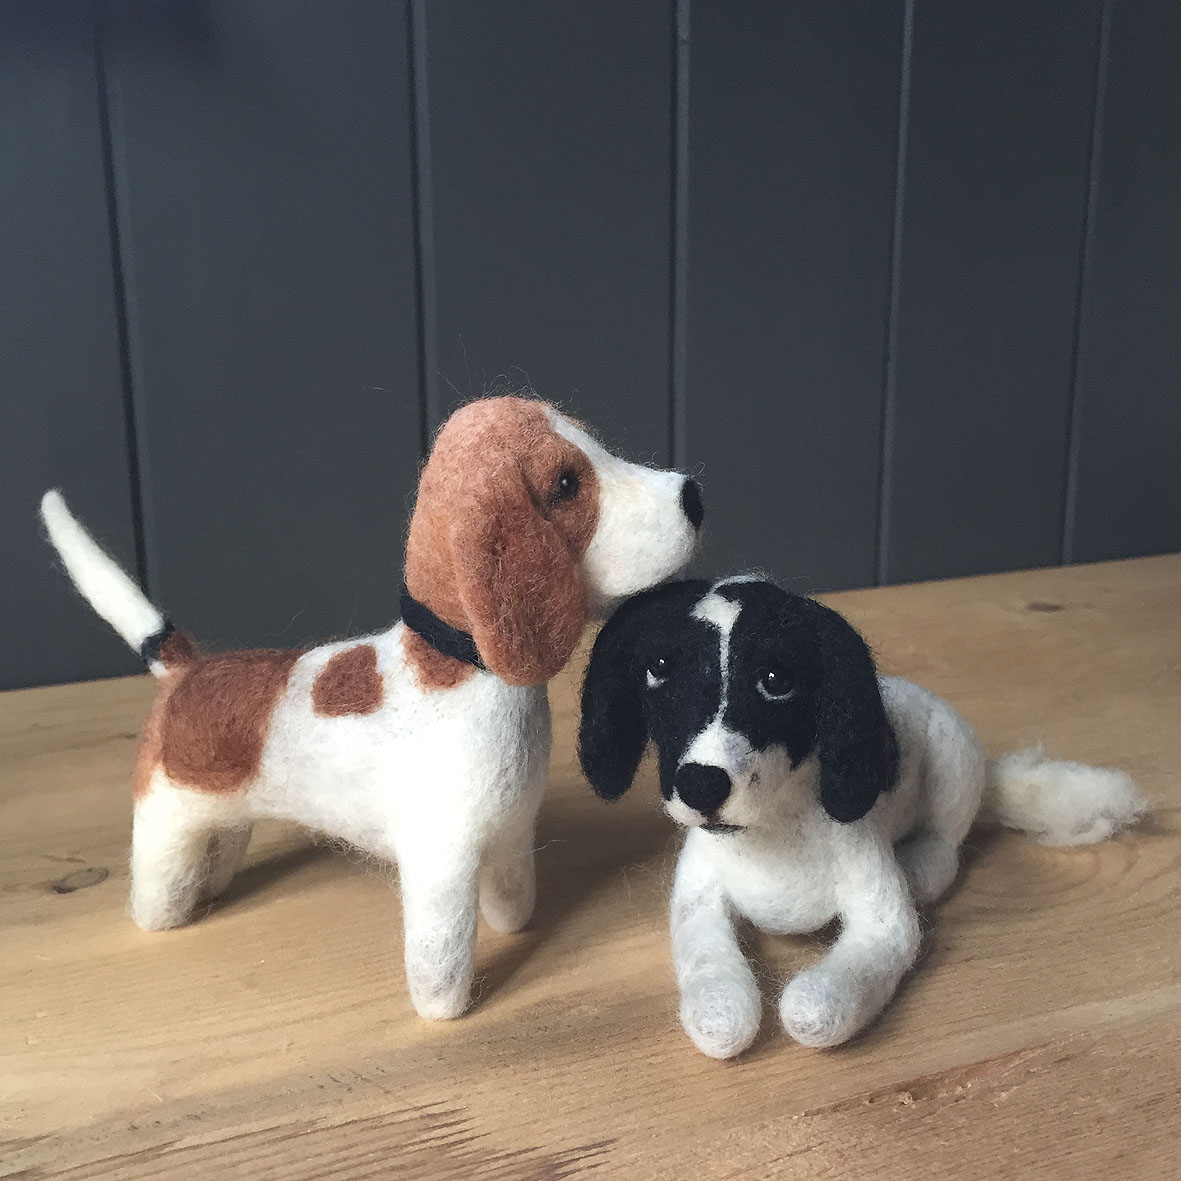 Beagle and small dog.jpg